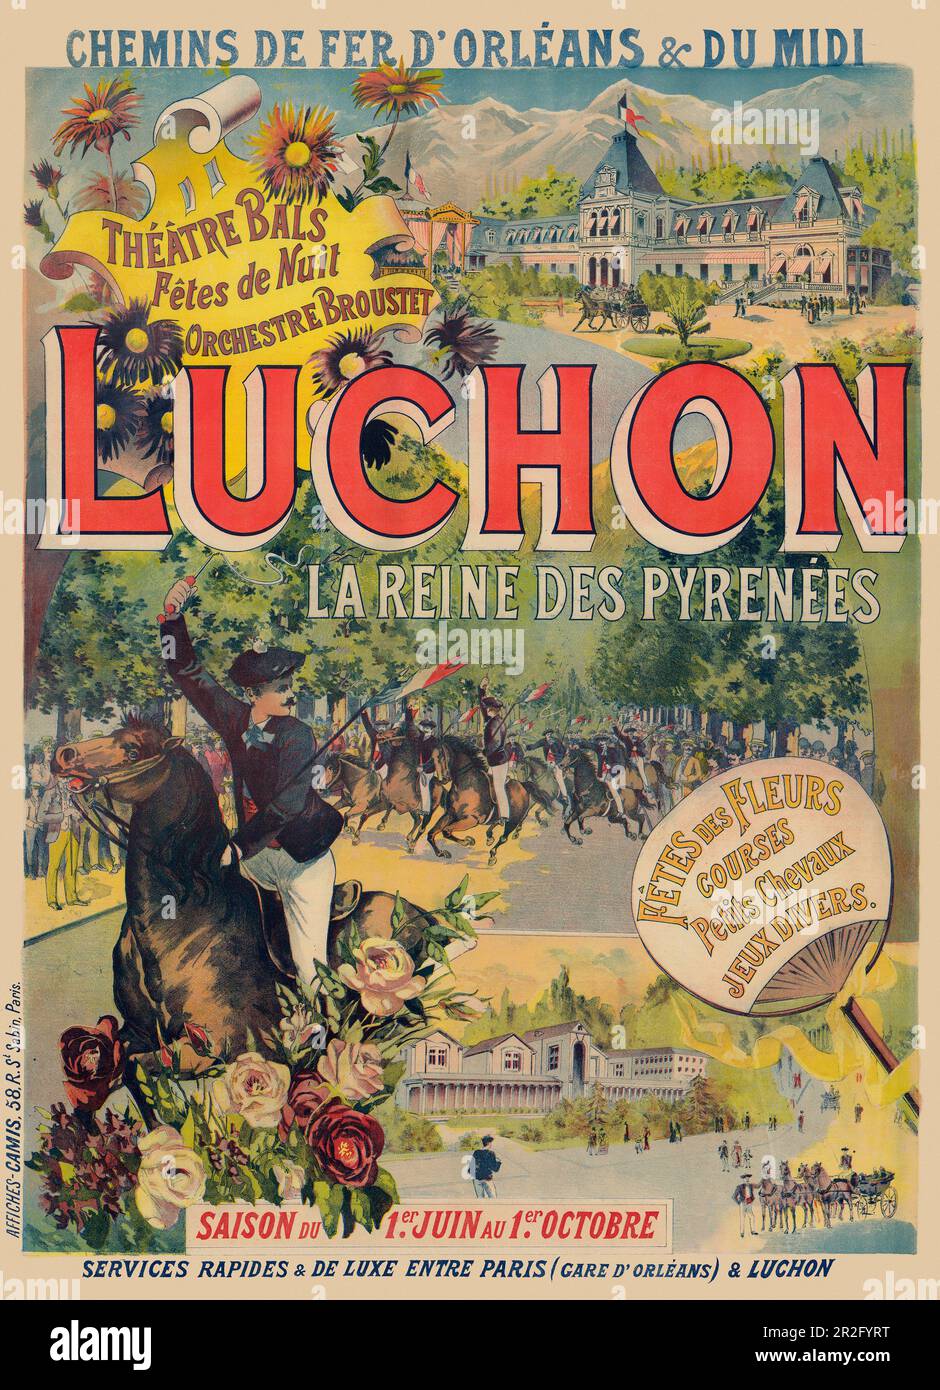 Chemins de Fer d'Orléans & du Midi. Luchon. La reine des Pyrenées. Artista sconosciuto. Poster pubblicato nel 1890 in Francia. Foto Stock